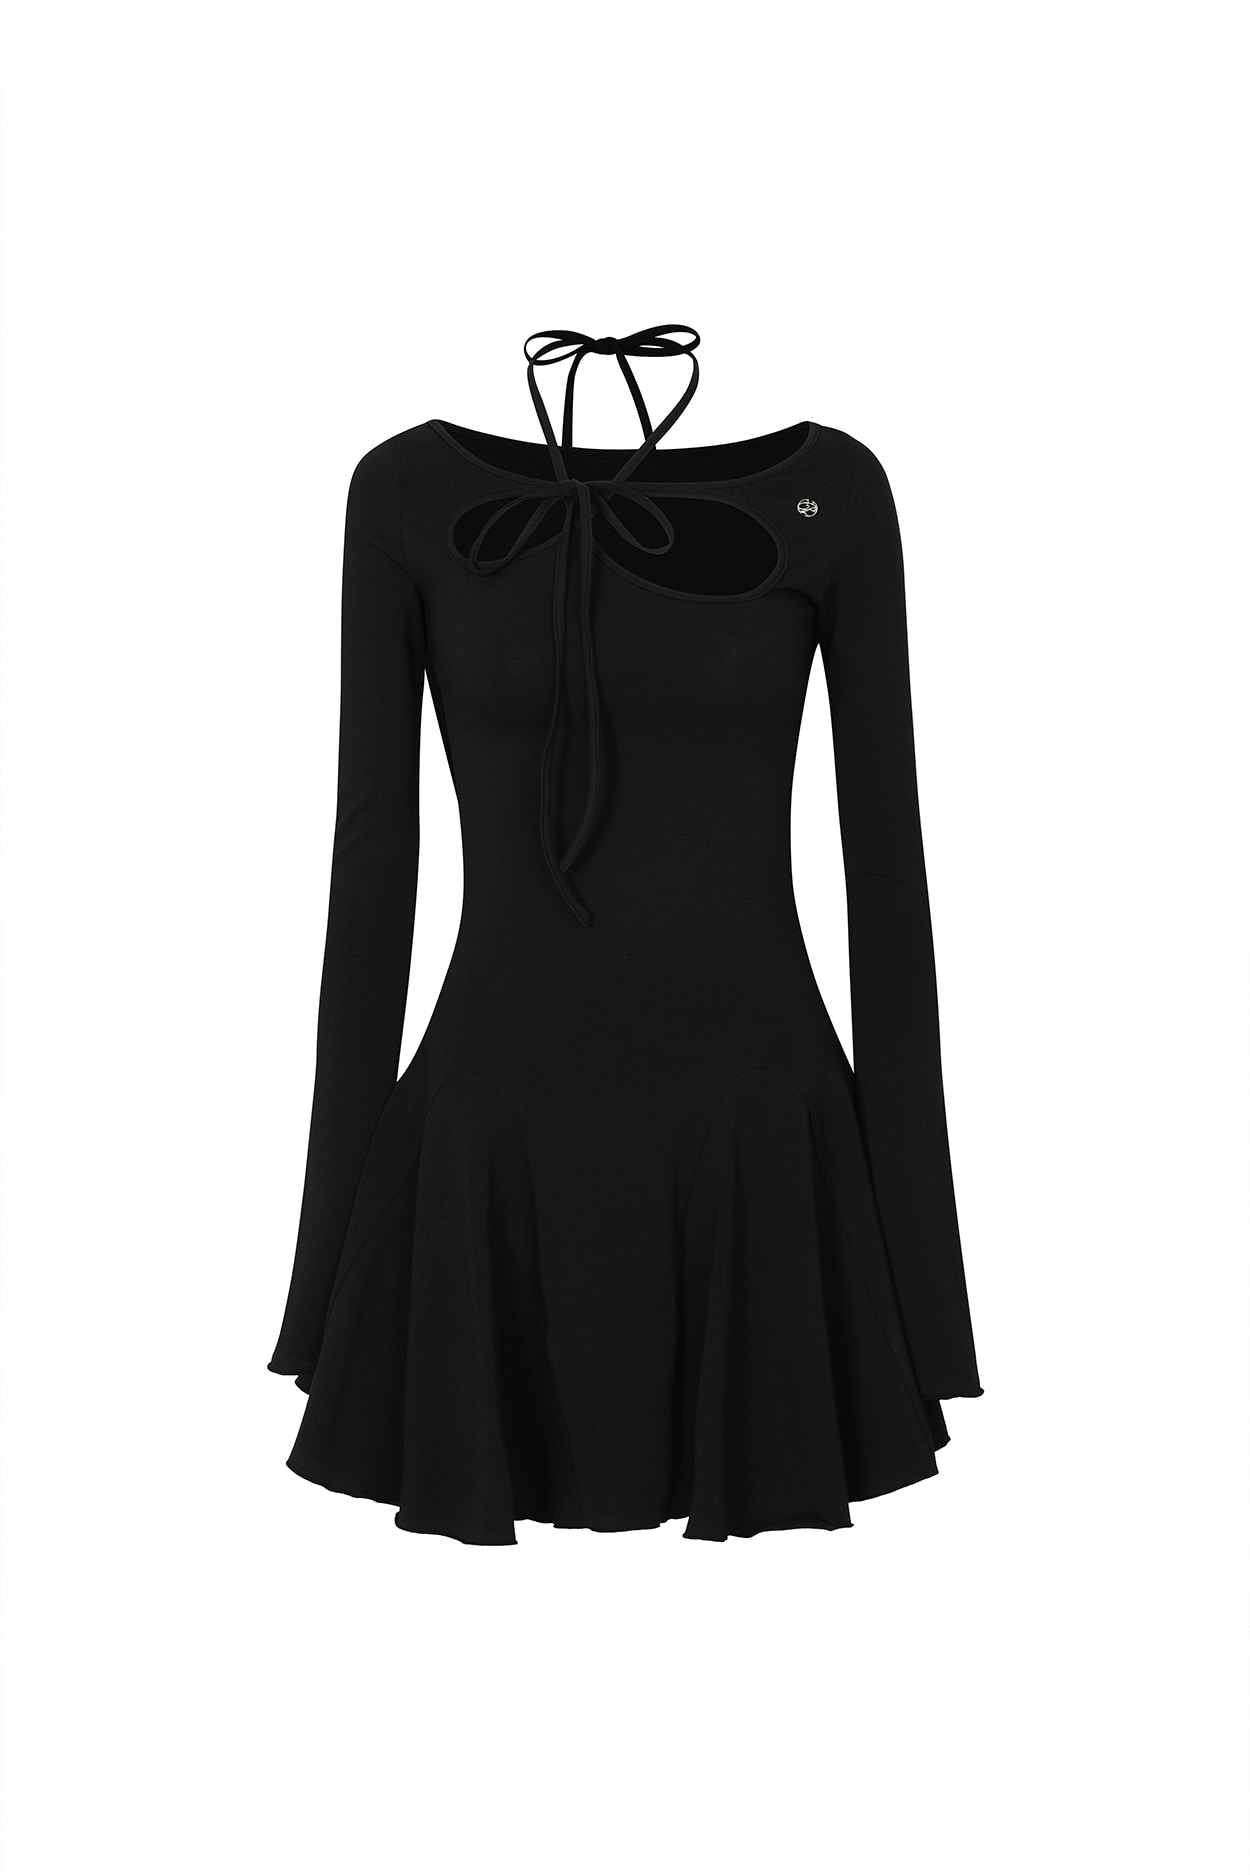 [3/28~] ORCHID DRESS black